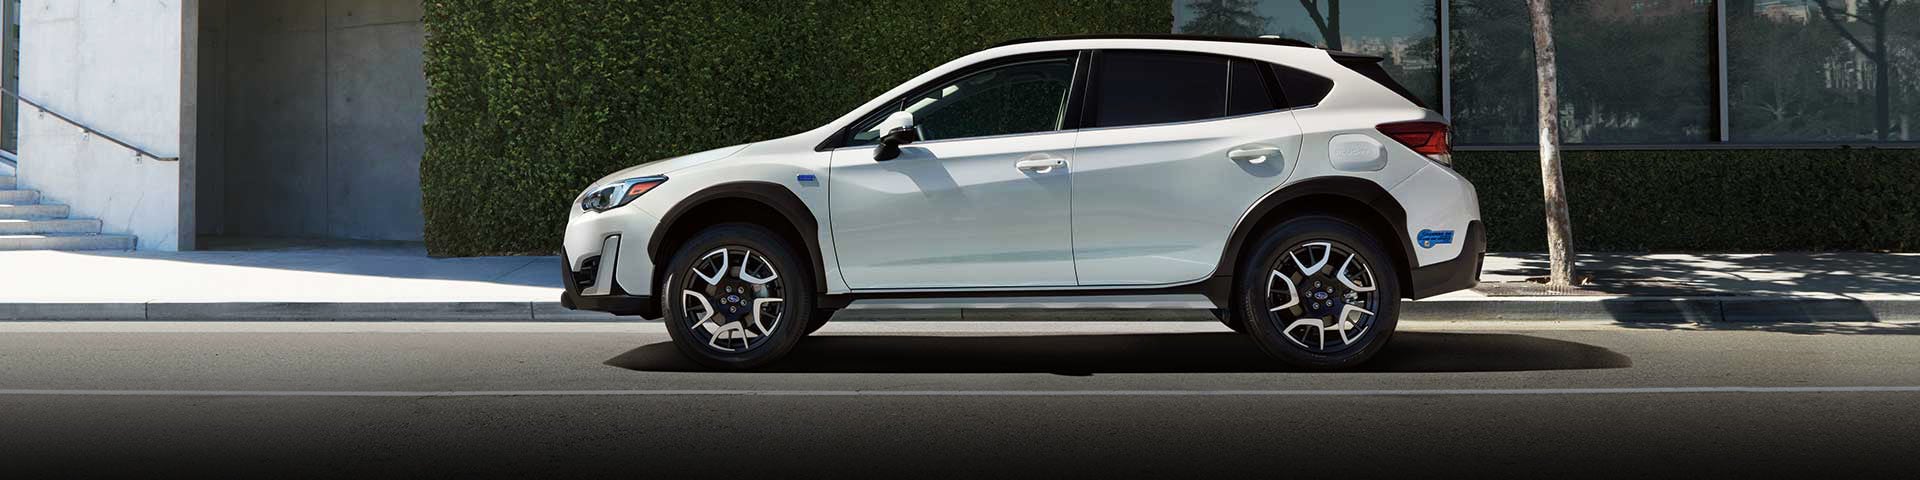 The side profile of a white Subaru Crosstrek Hybrid | John Kennedy Subaru in Plymouth Meeting PA